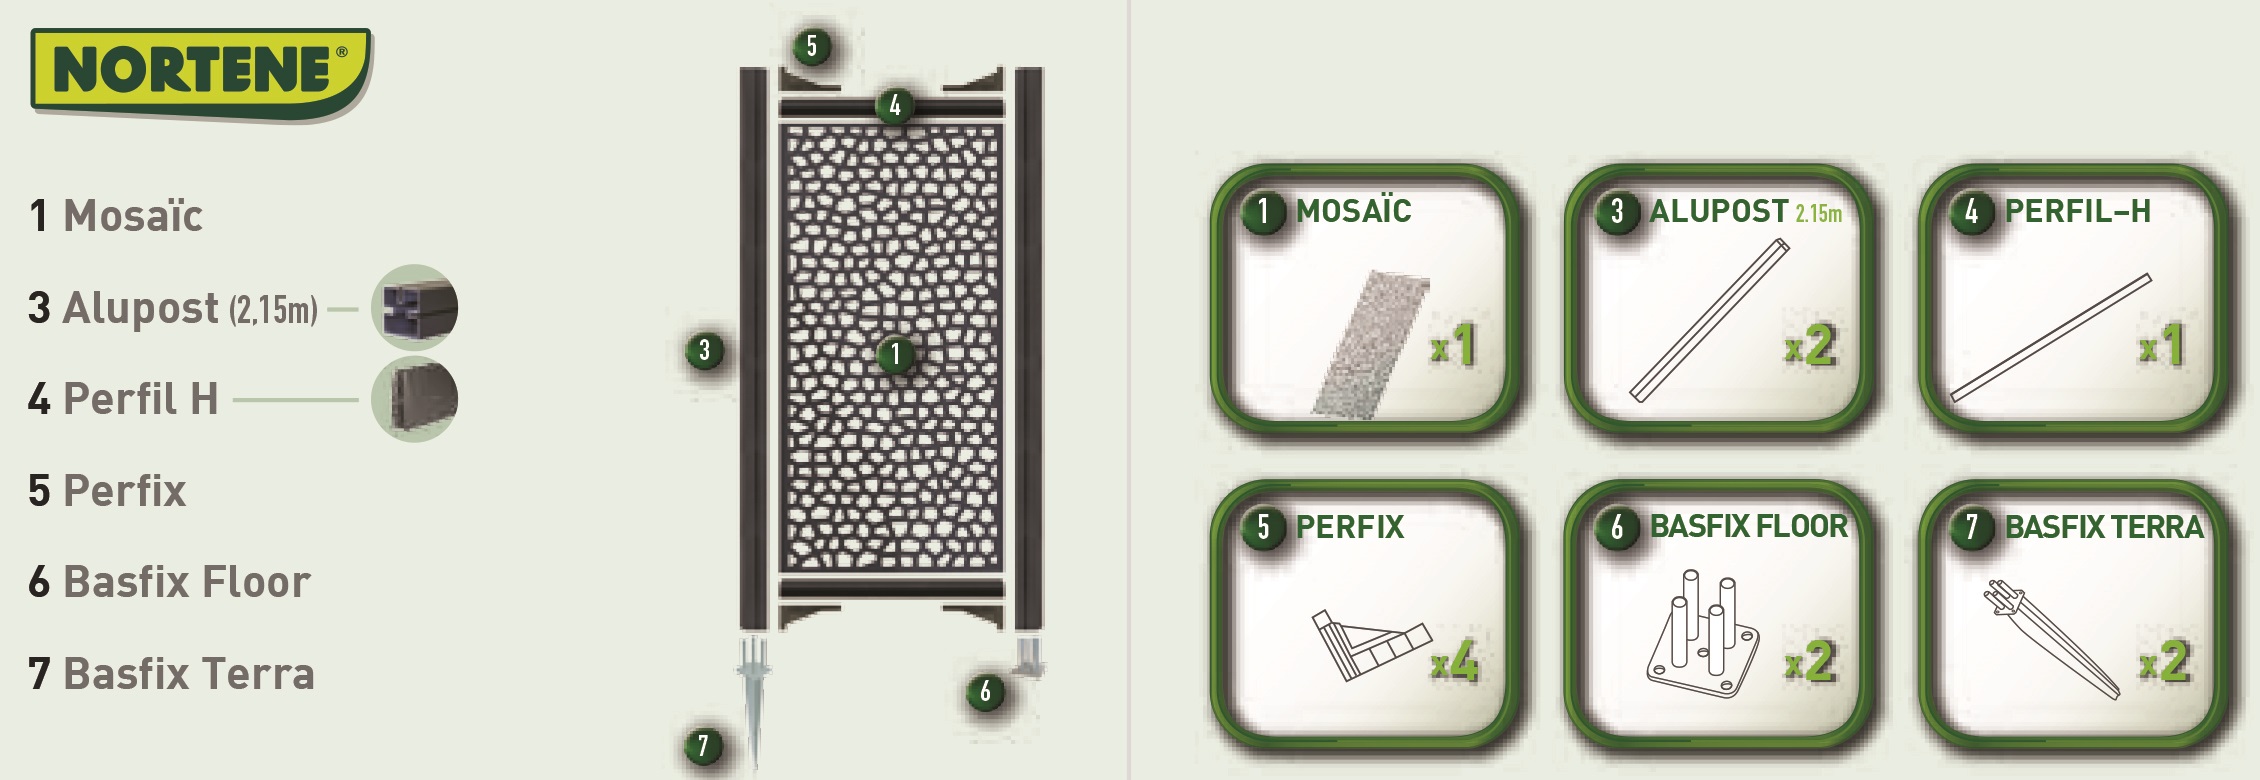 Aluminiumpfosten zur Befestigung von Mosaik/Privatplatten Alupost braun 115 cm